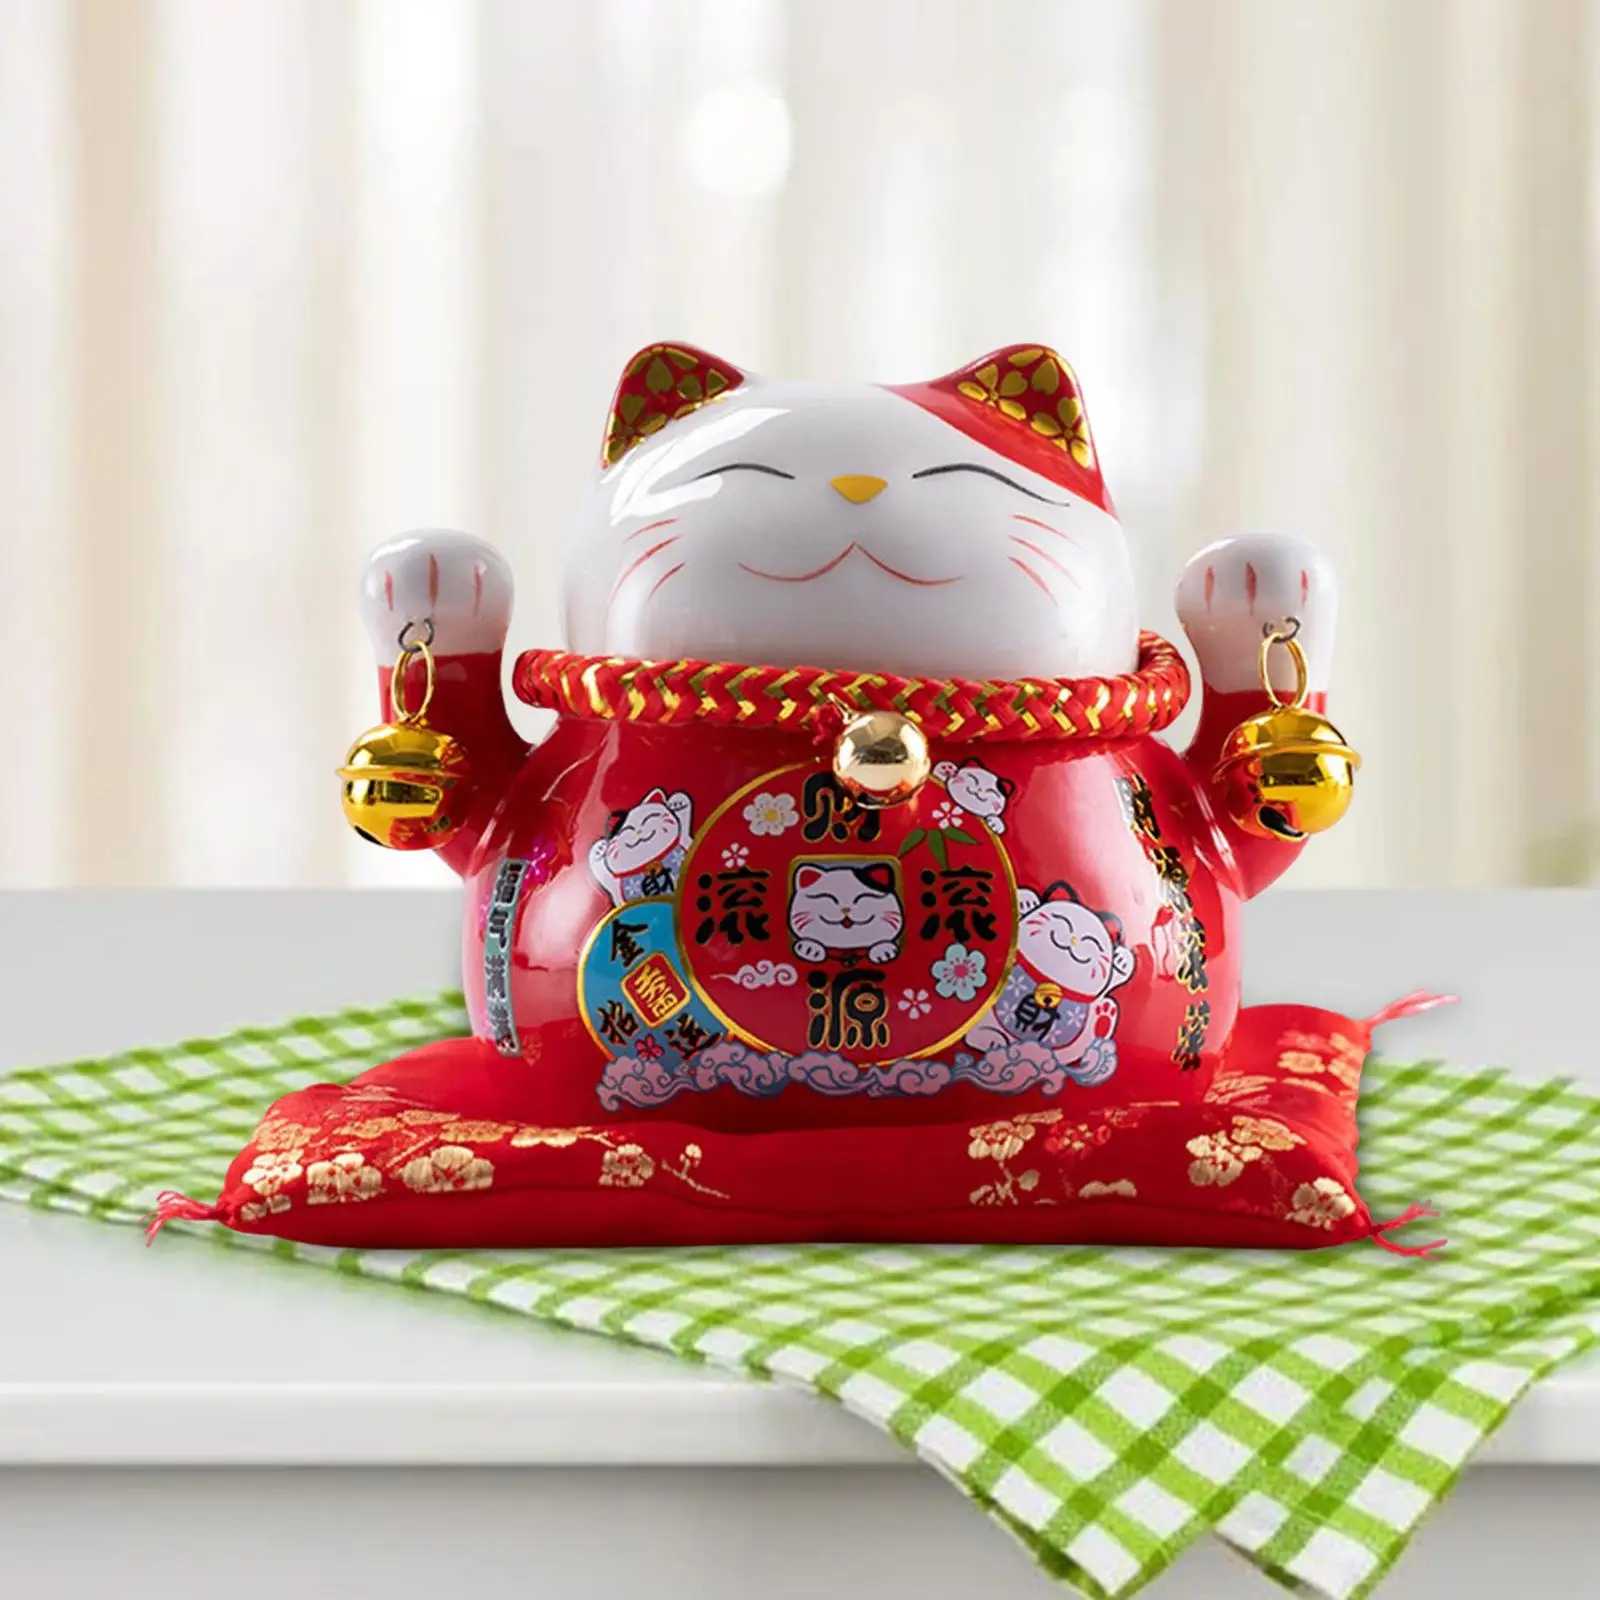 Cute Lucky Cat Money Bank Kitten Figurine Money Saving Box for Desktop Decoration Collection